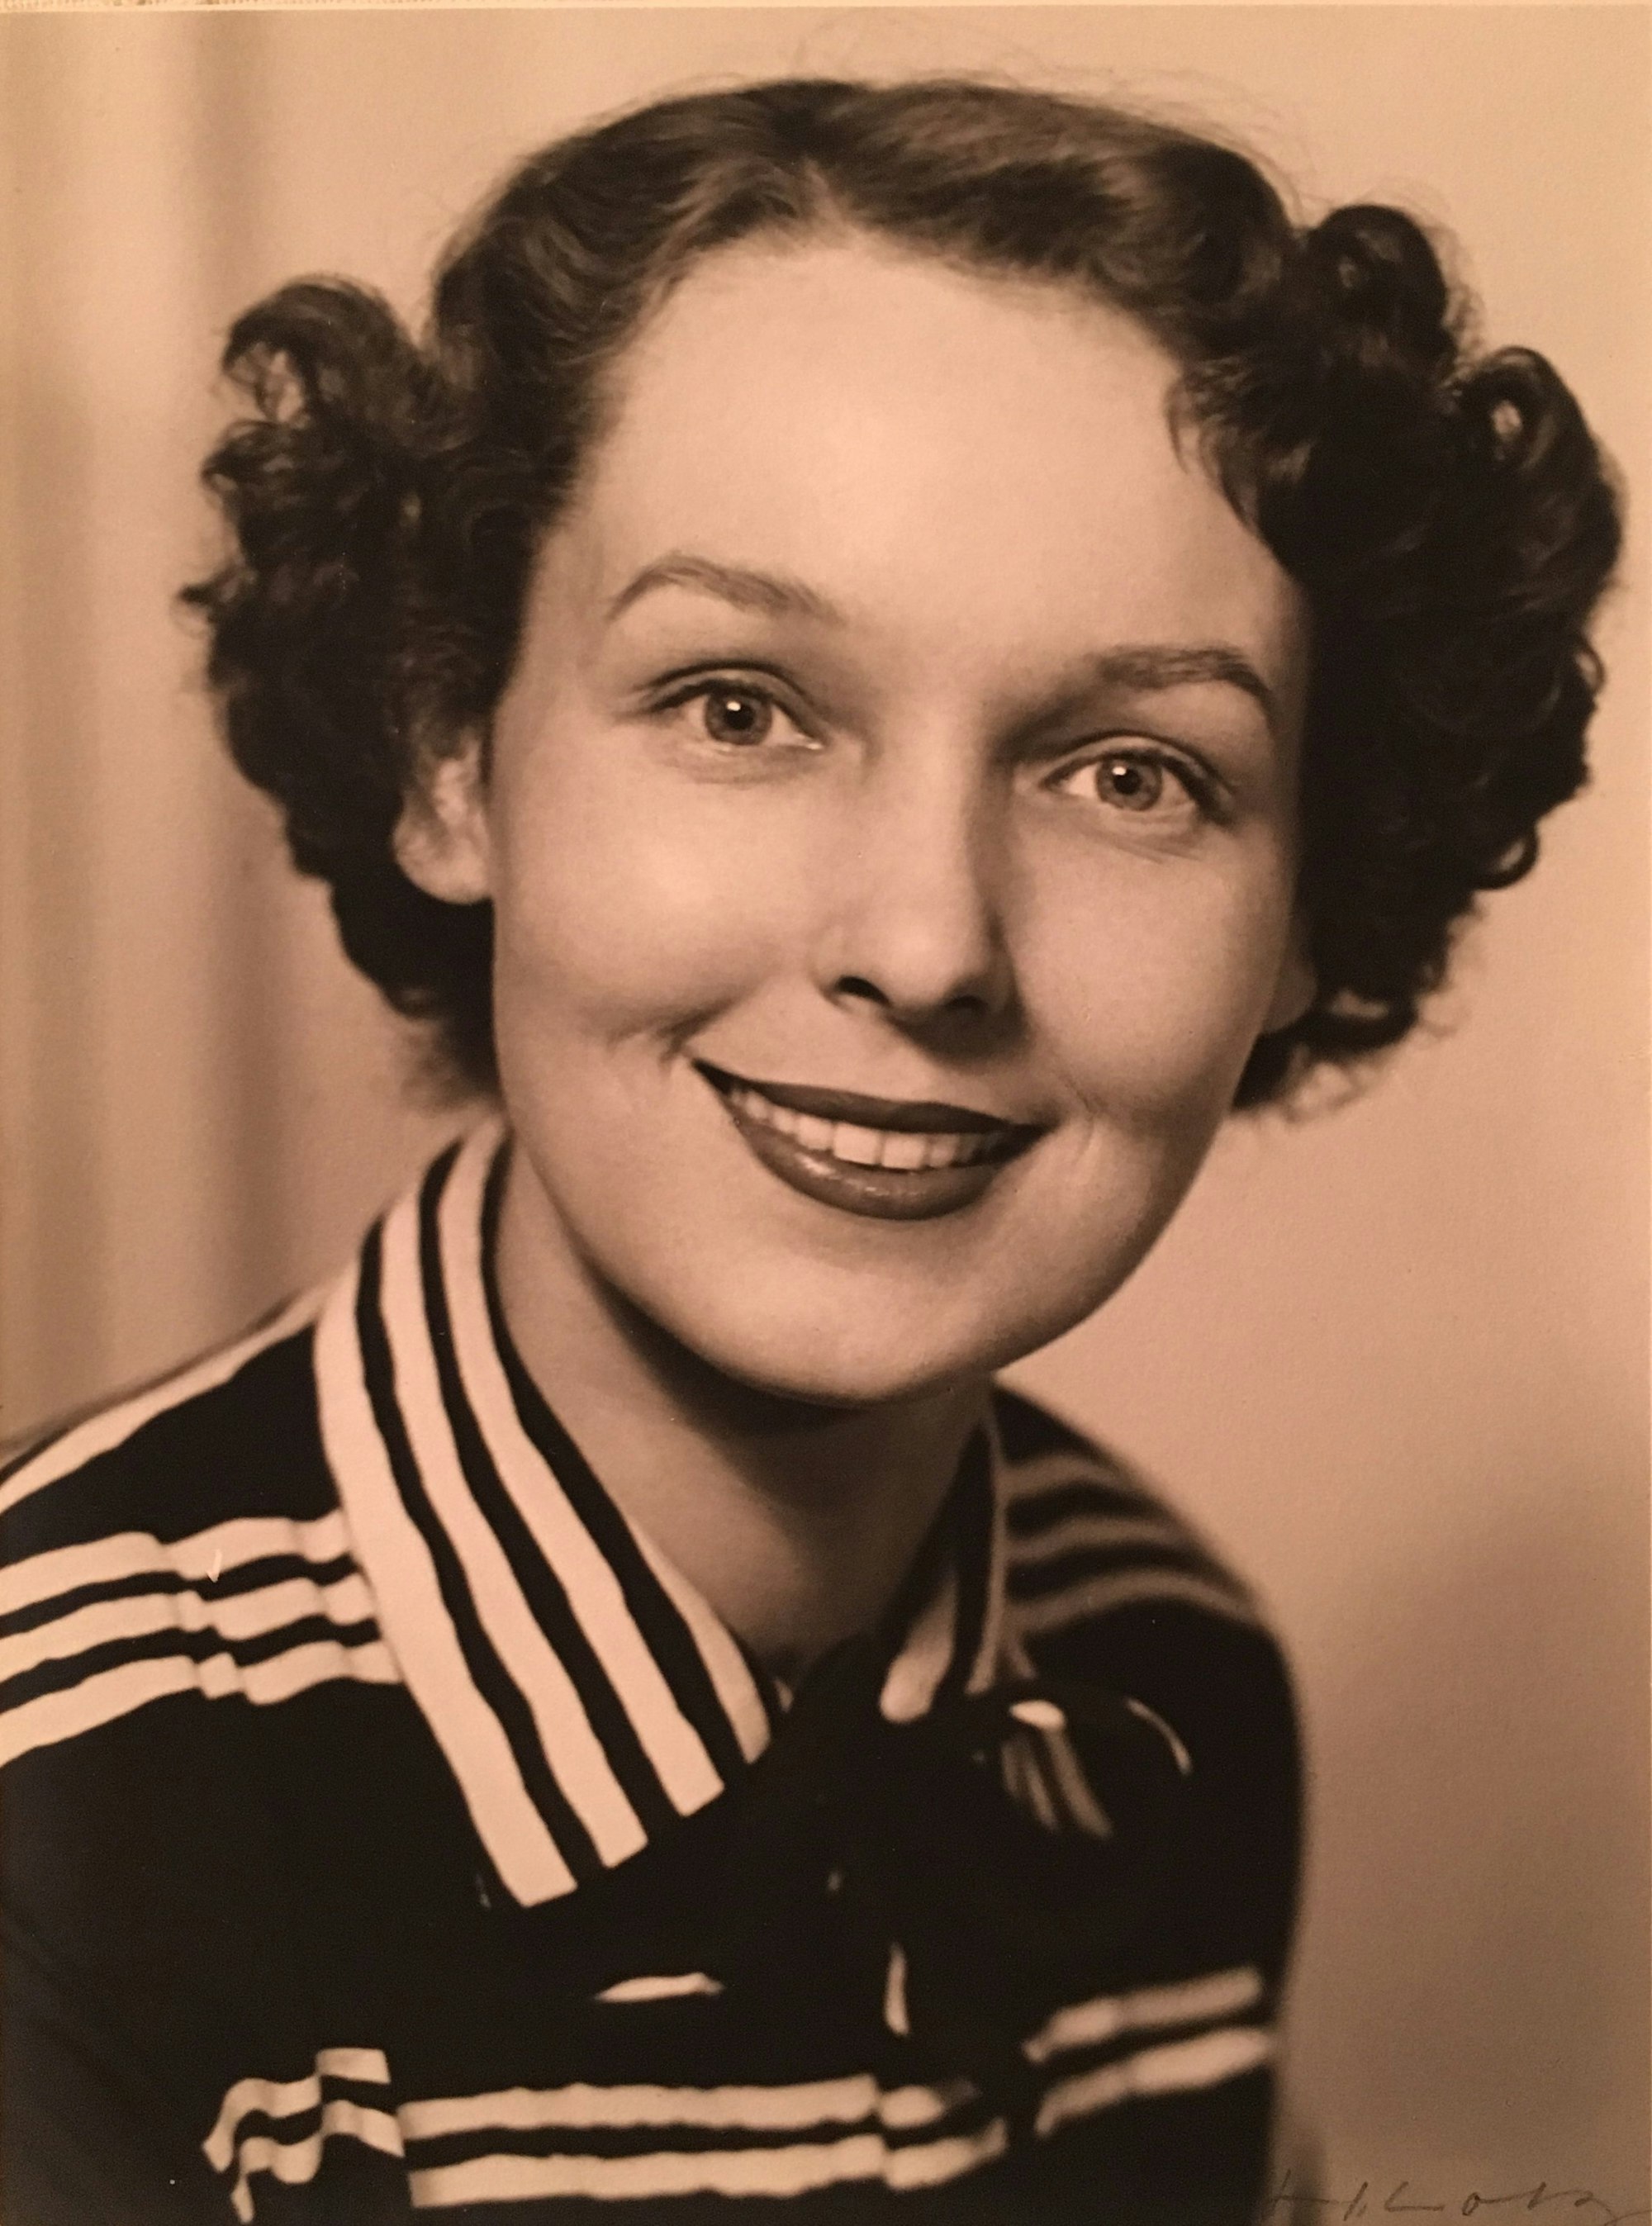 Hannemarie Valder als junge Frau in den 50ern.